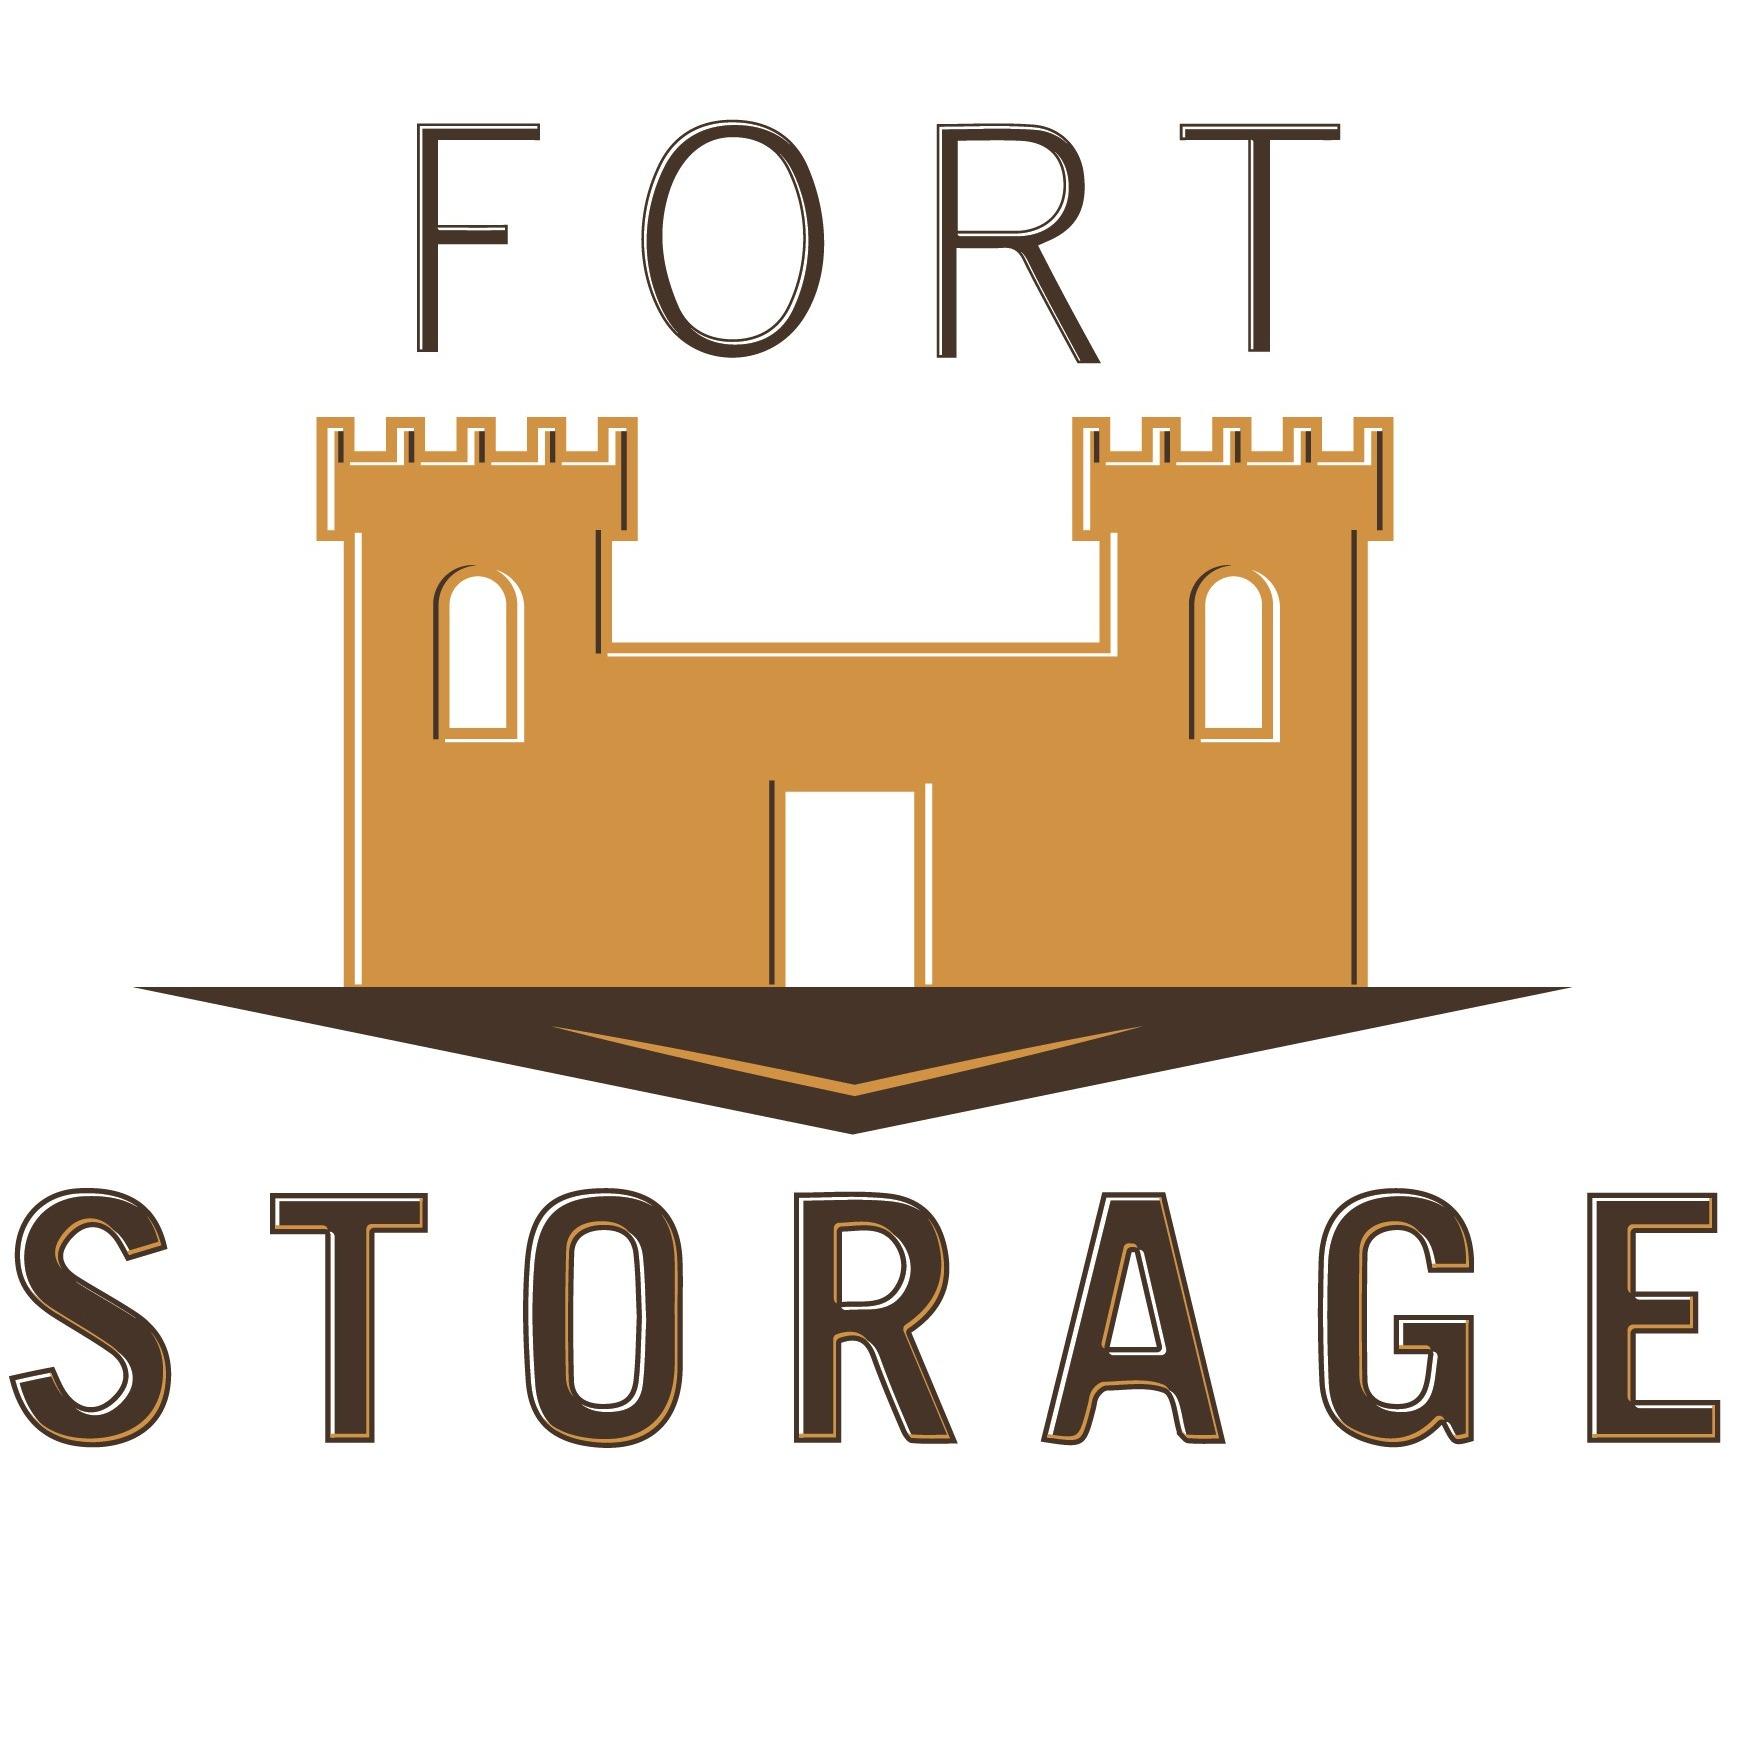 Fort Storage - Milton, FL 32583 - (850)629-0023 | ShowMeLocal.com